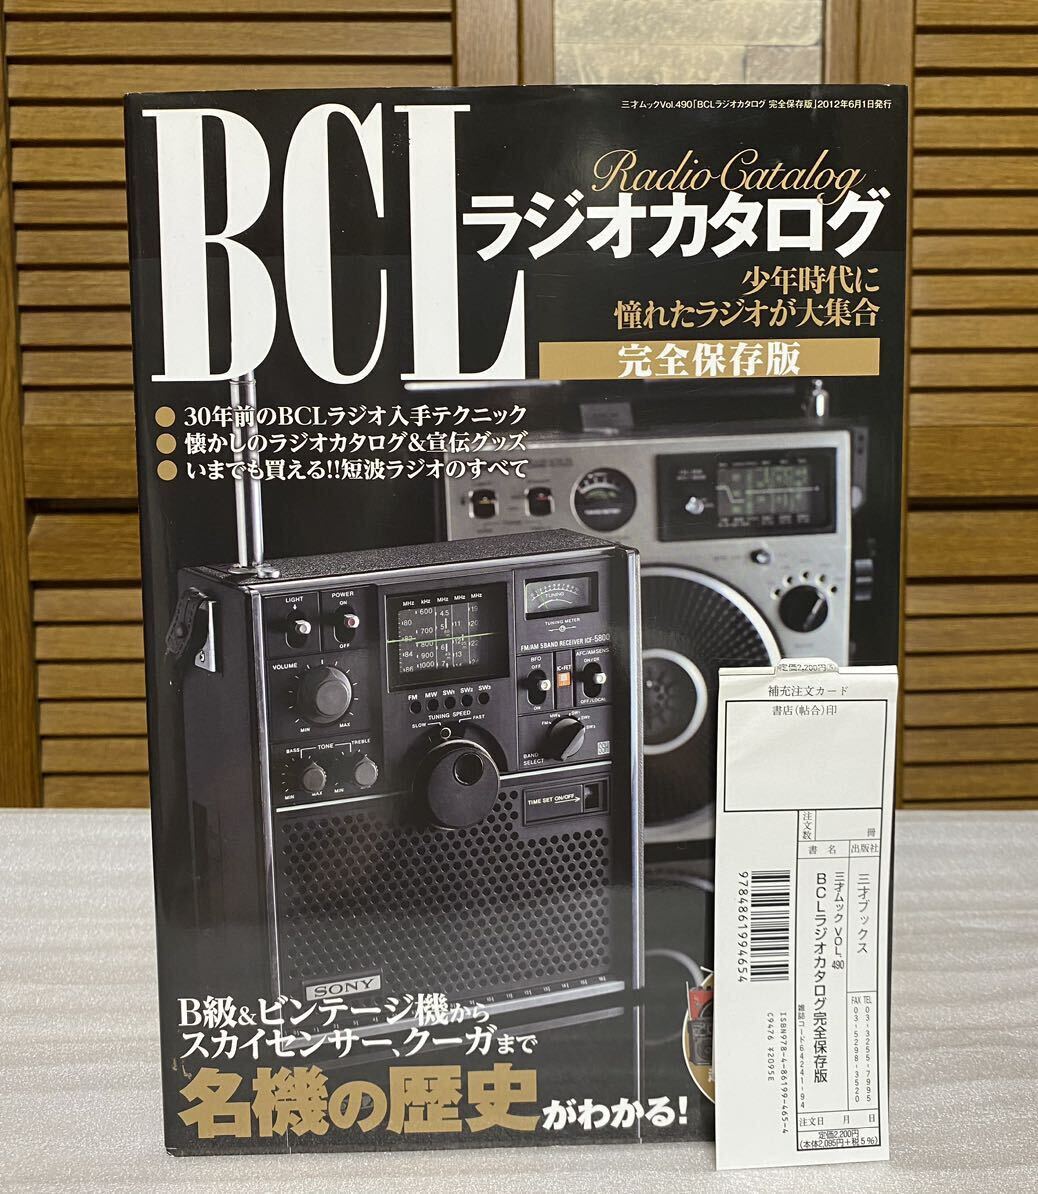  rare BCL radio catalog ultimate beautiful goods name machine 